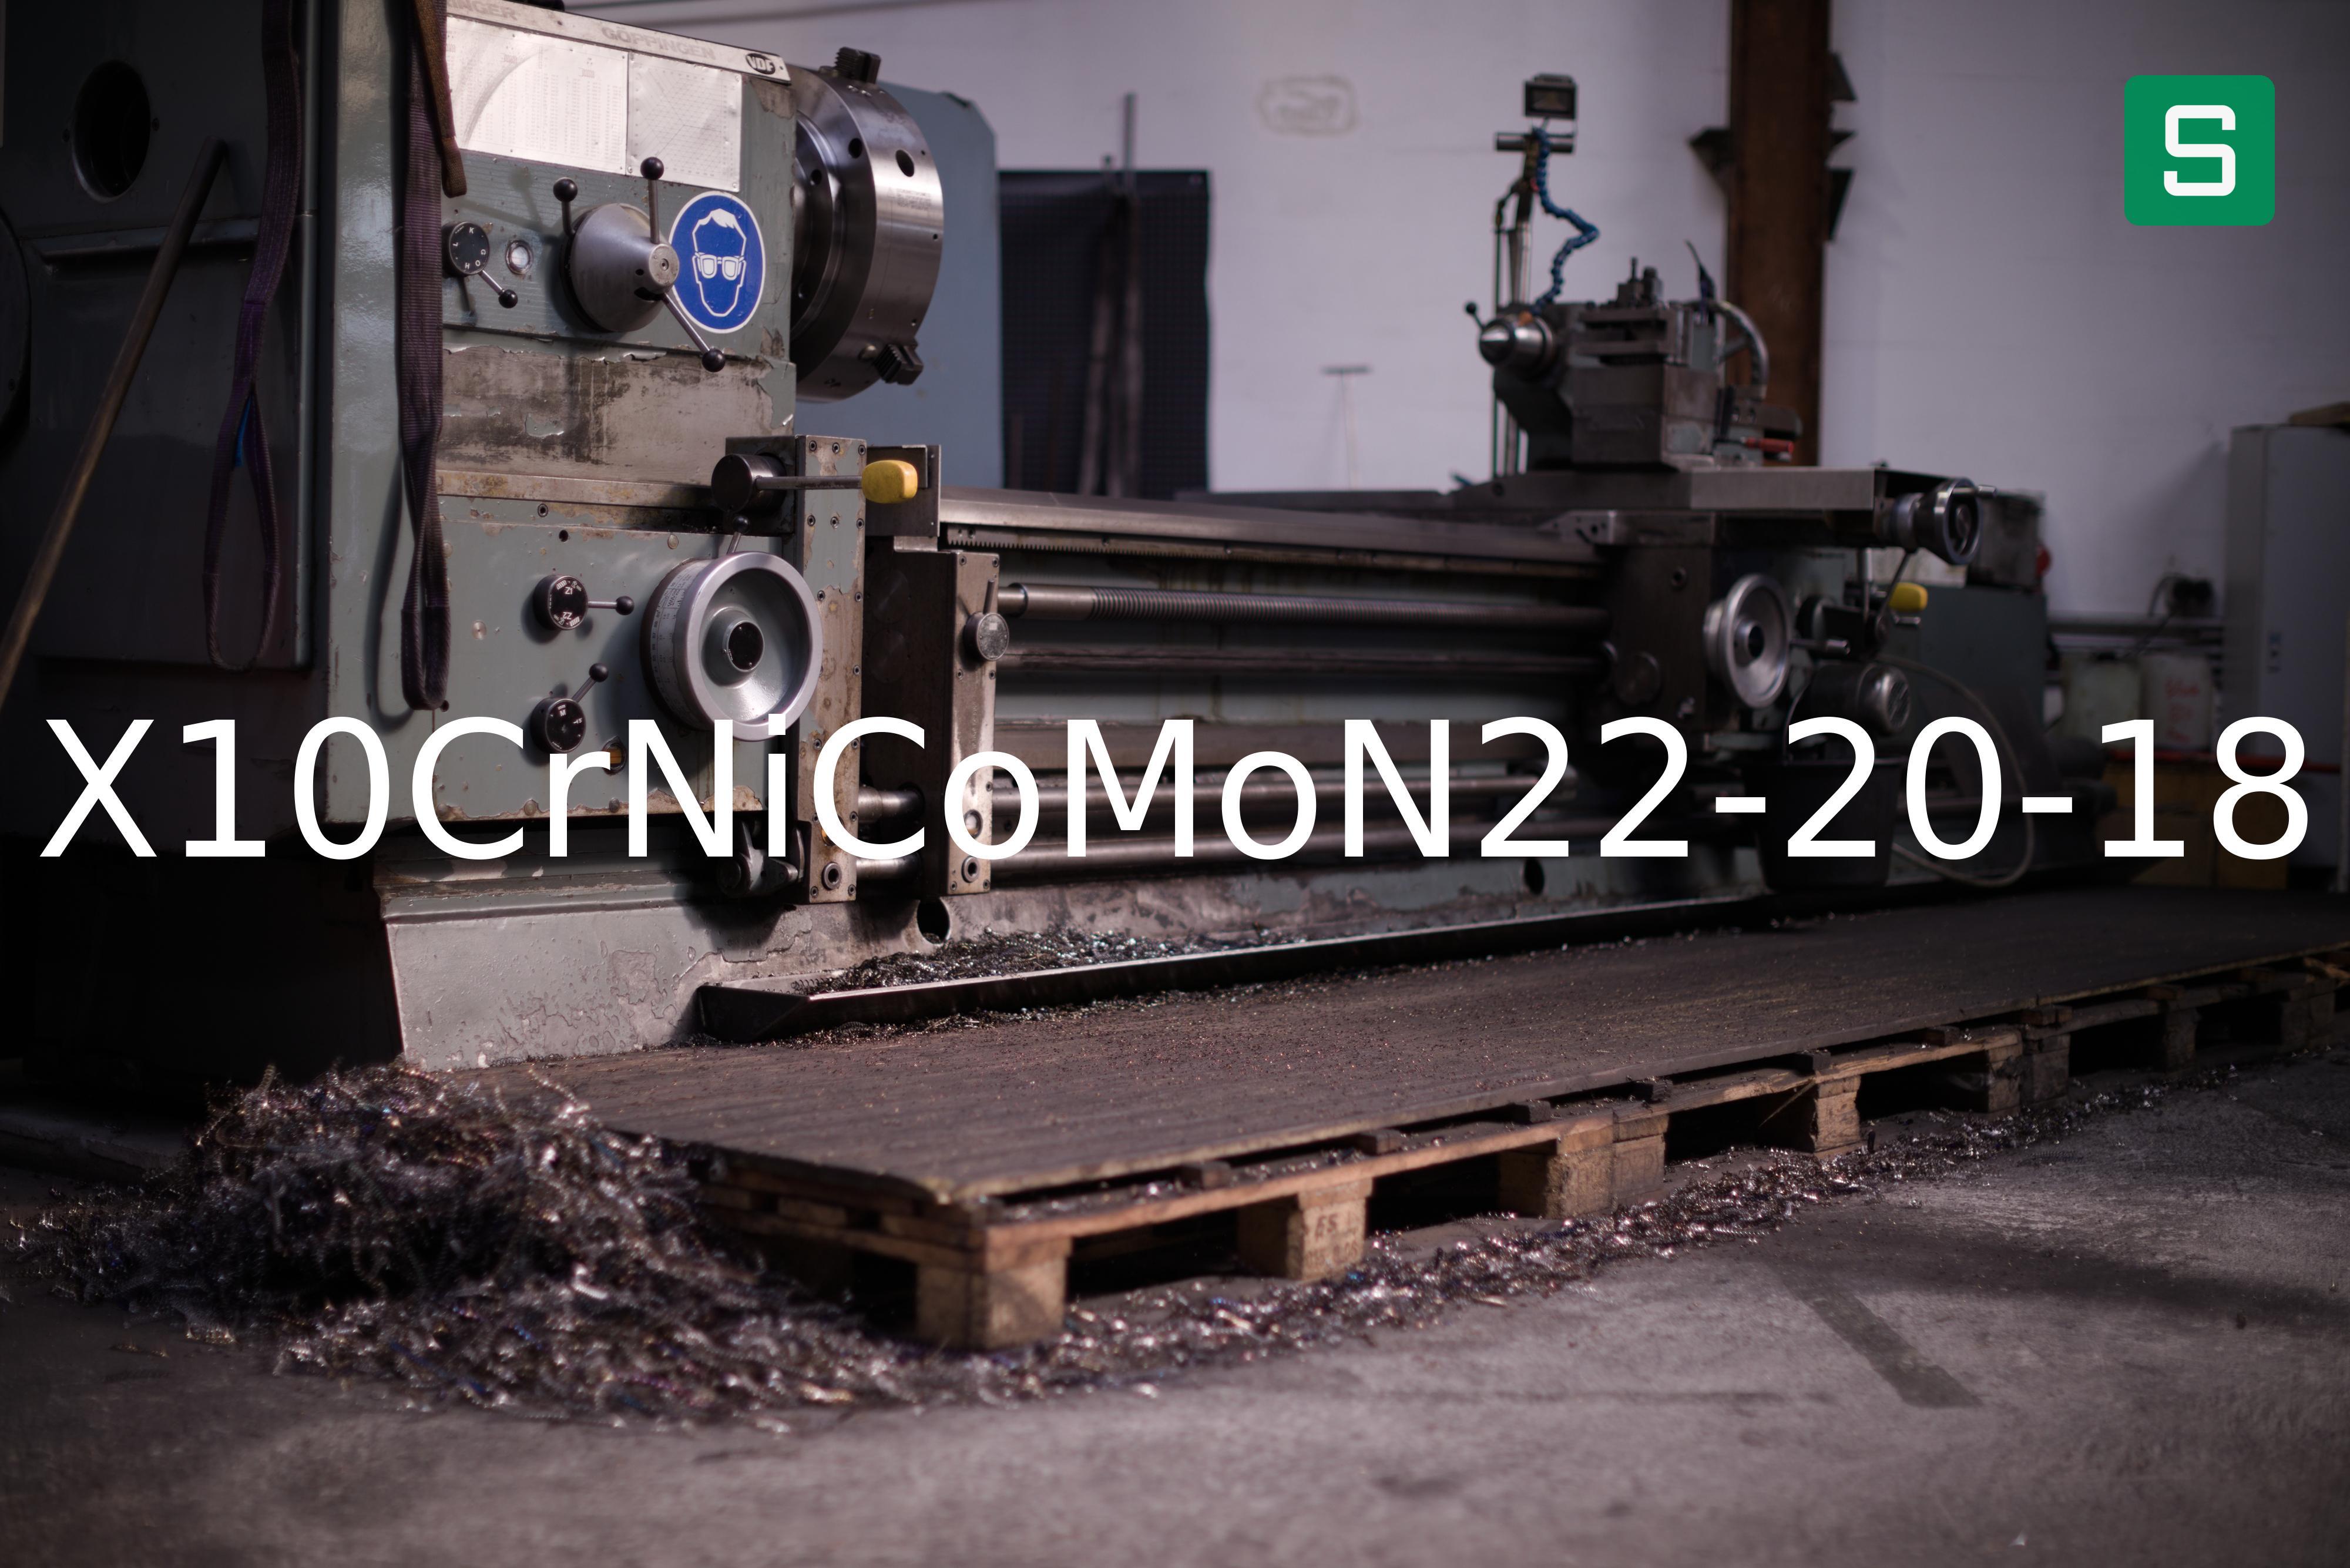 Steel Material: X10CrNiCoMoN22-20-18